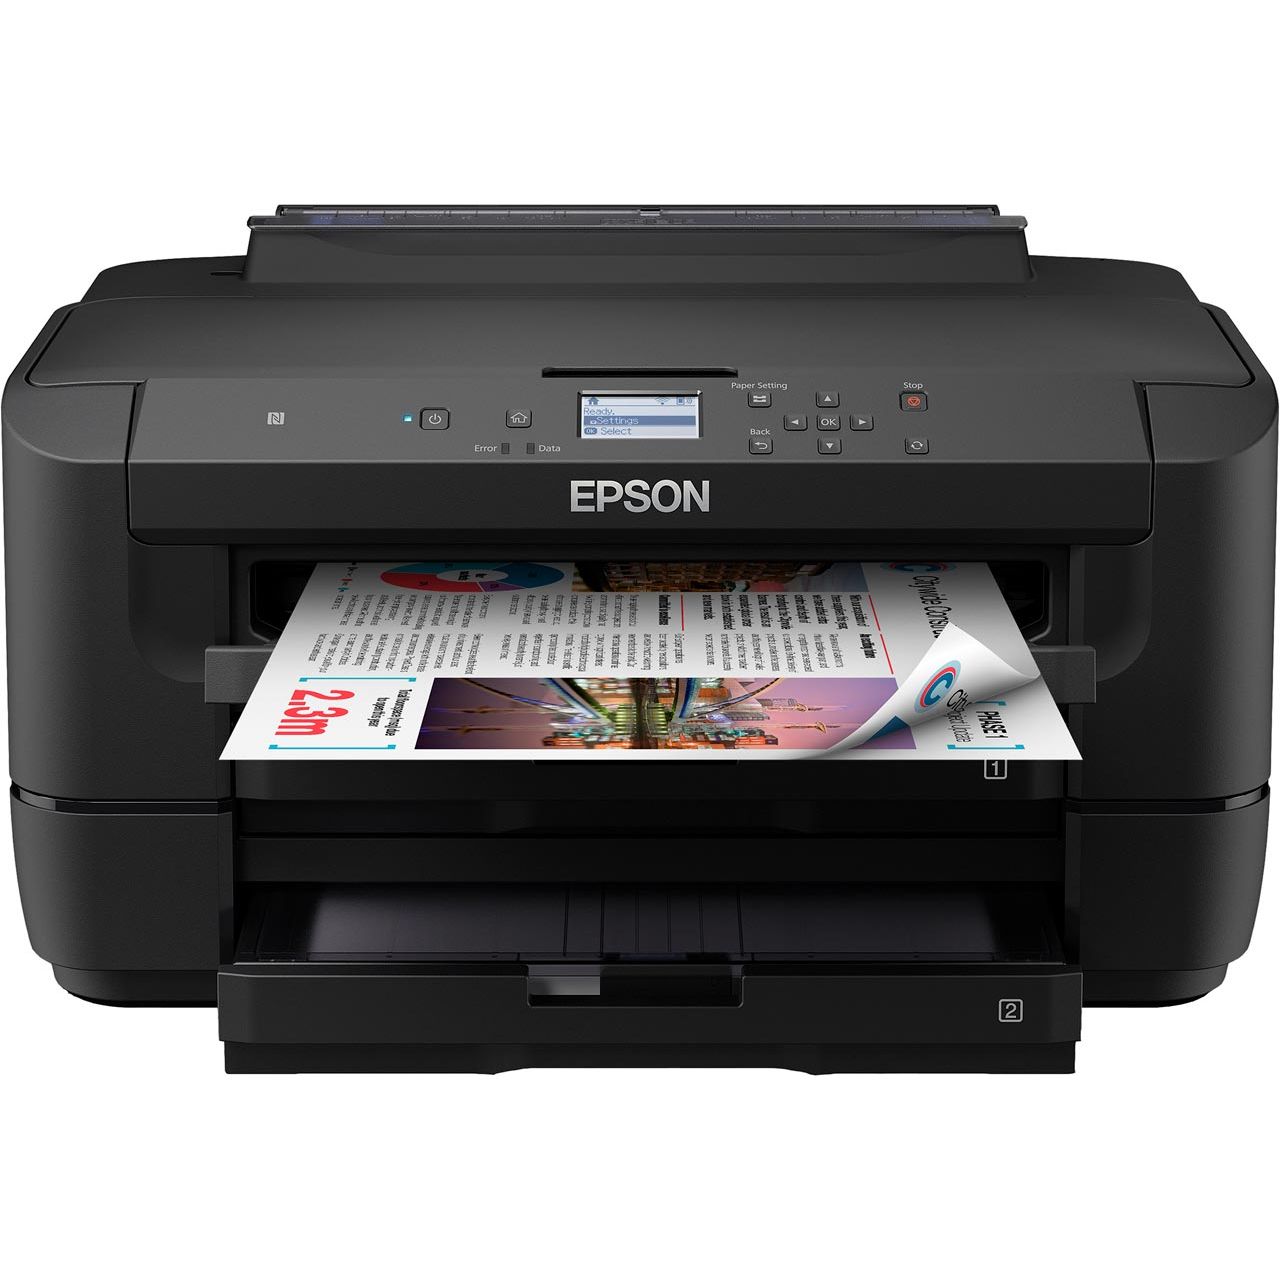 Epson WorkForce WF-7210DTW Inkjet Printer Review